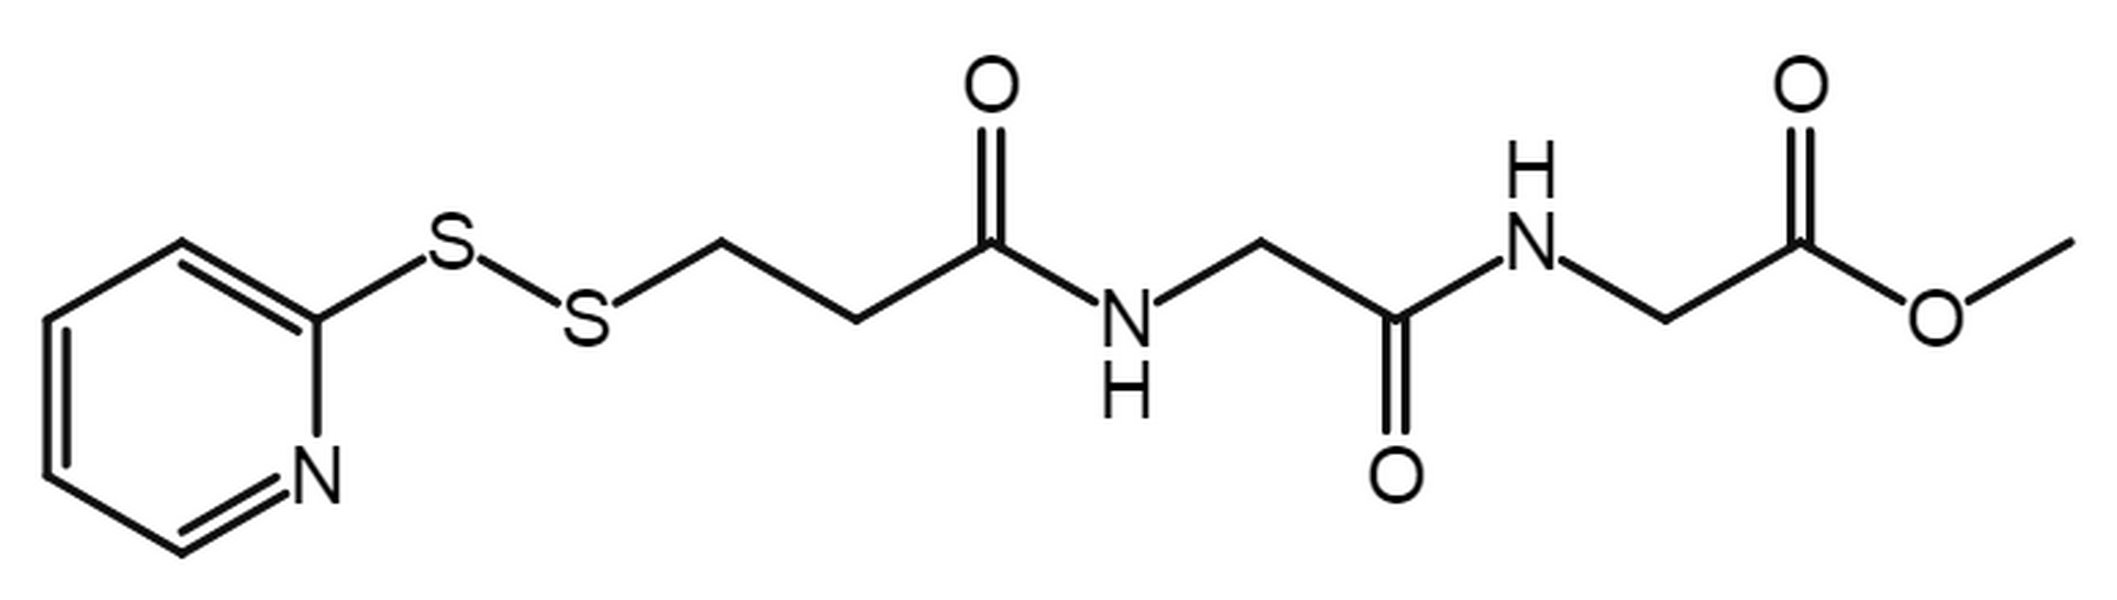 SPDP-Gly-Gly-methoxy